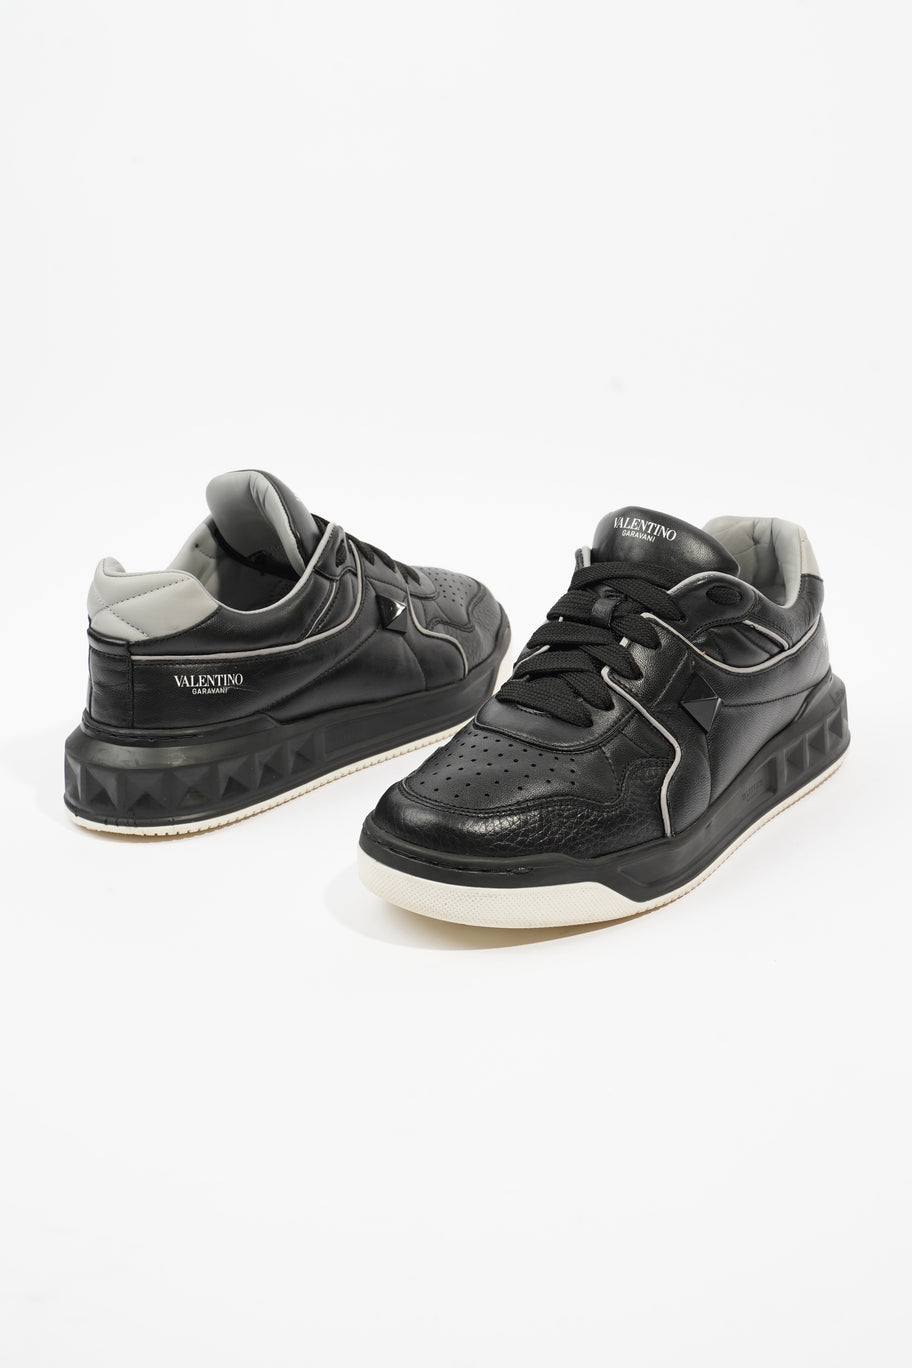 One Stud Sneakers Black / Grey Leather EU 40 UK 6 Image 9